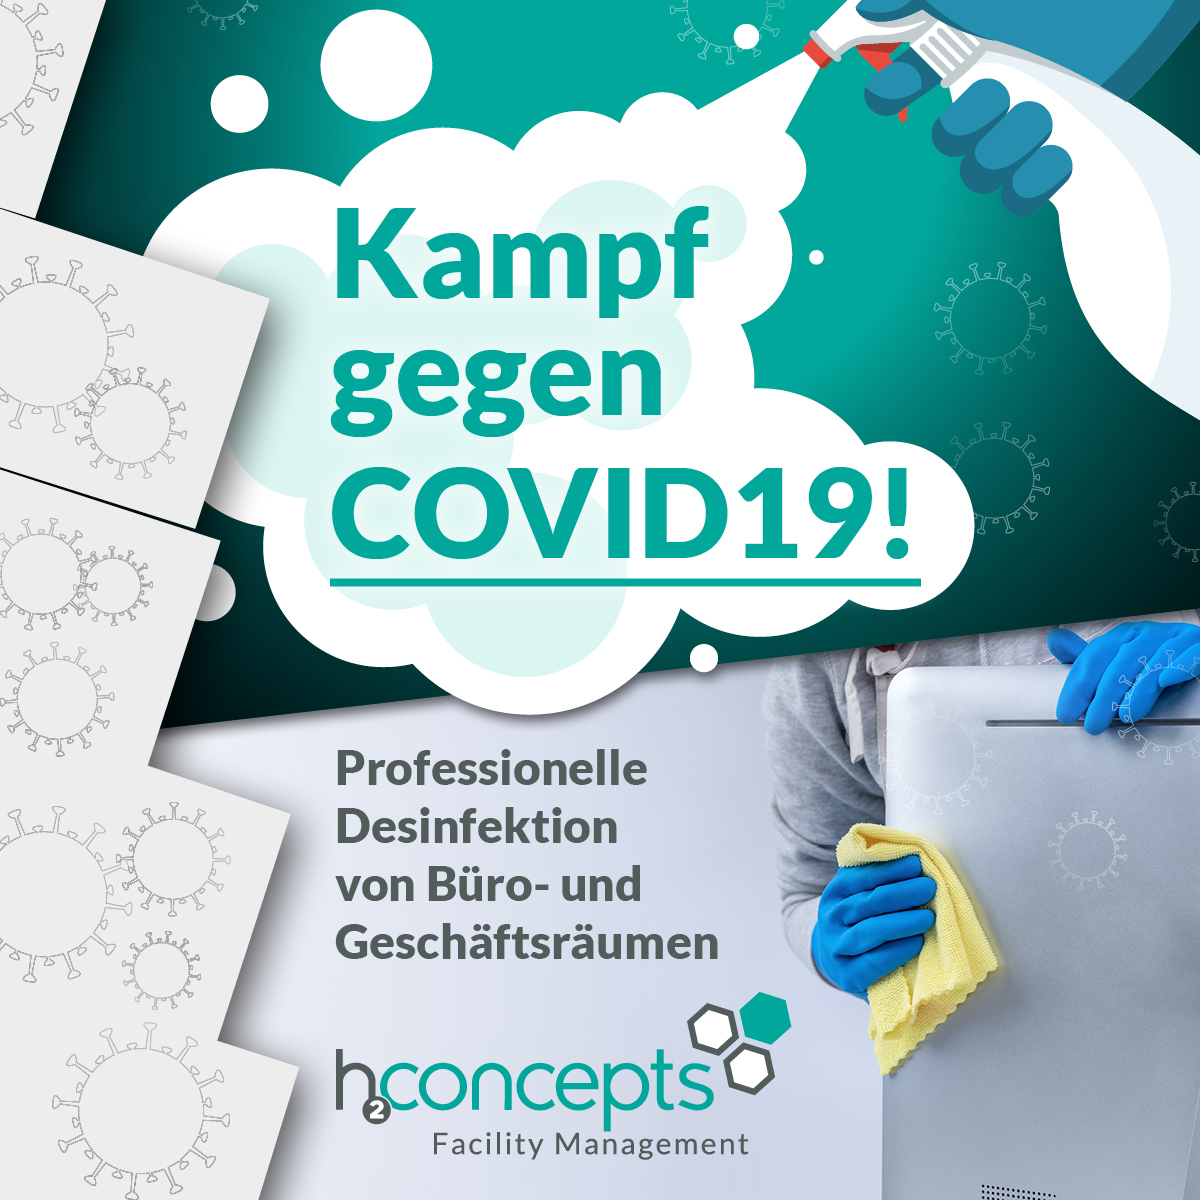 Desinfektionsarbeiten im Kampf gegen COVID-19